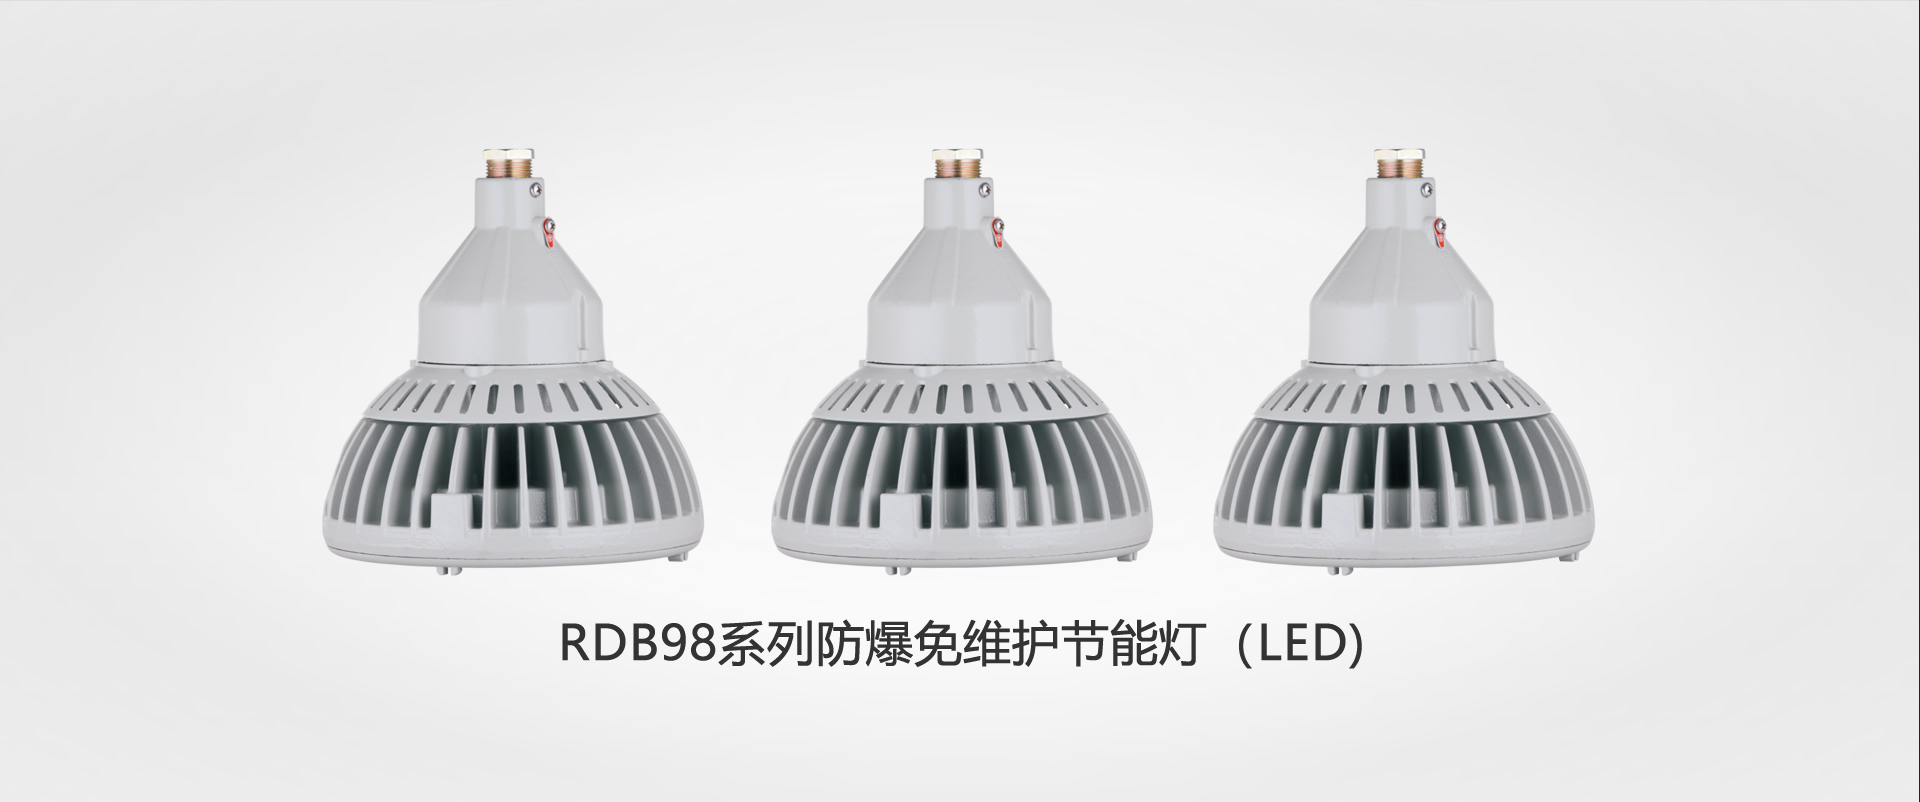 RDB98系列(lie)防爆免維護節能燈(deng)（LED)